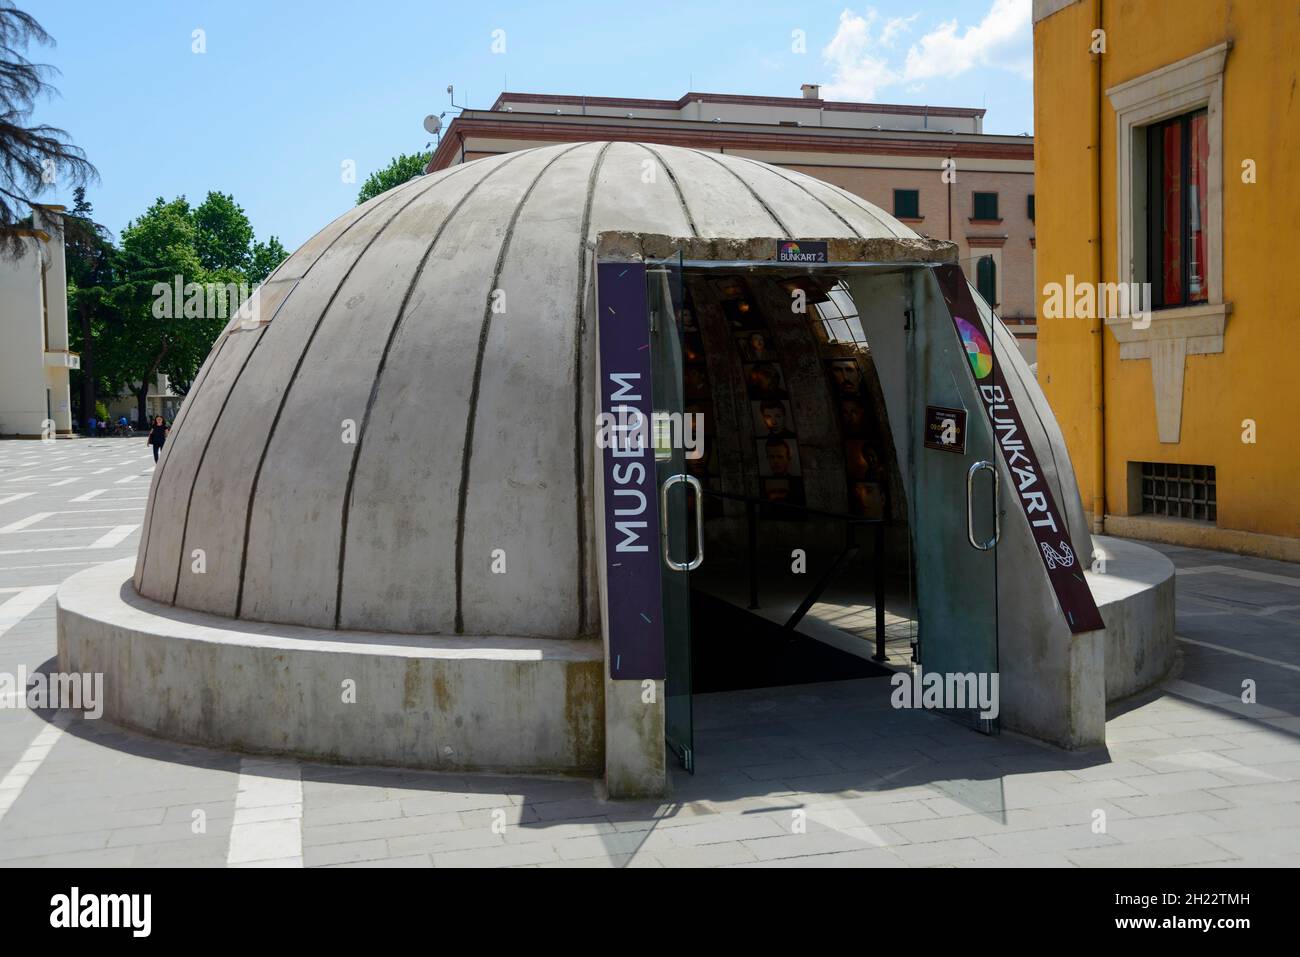 Old Bunker, Entrance to Bunk'Art 2 Museum, City Centre, Tirana, Albania Stock Photo